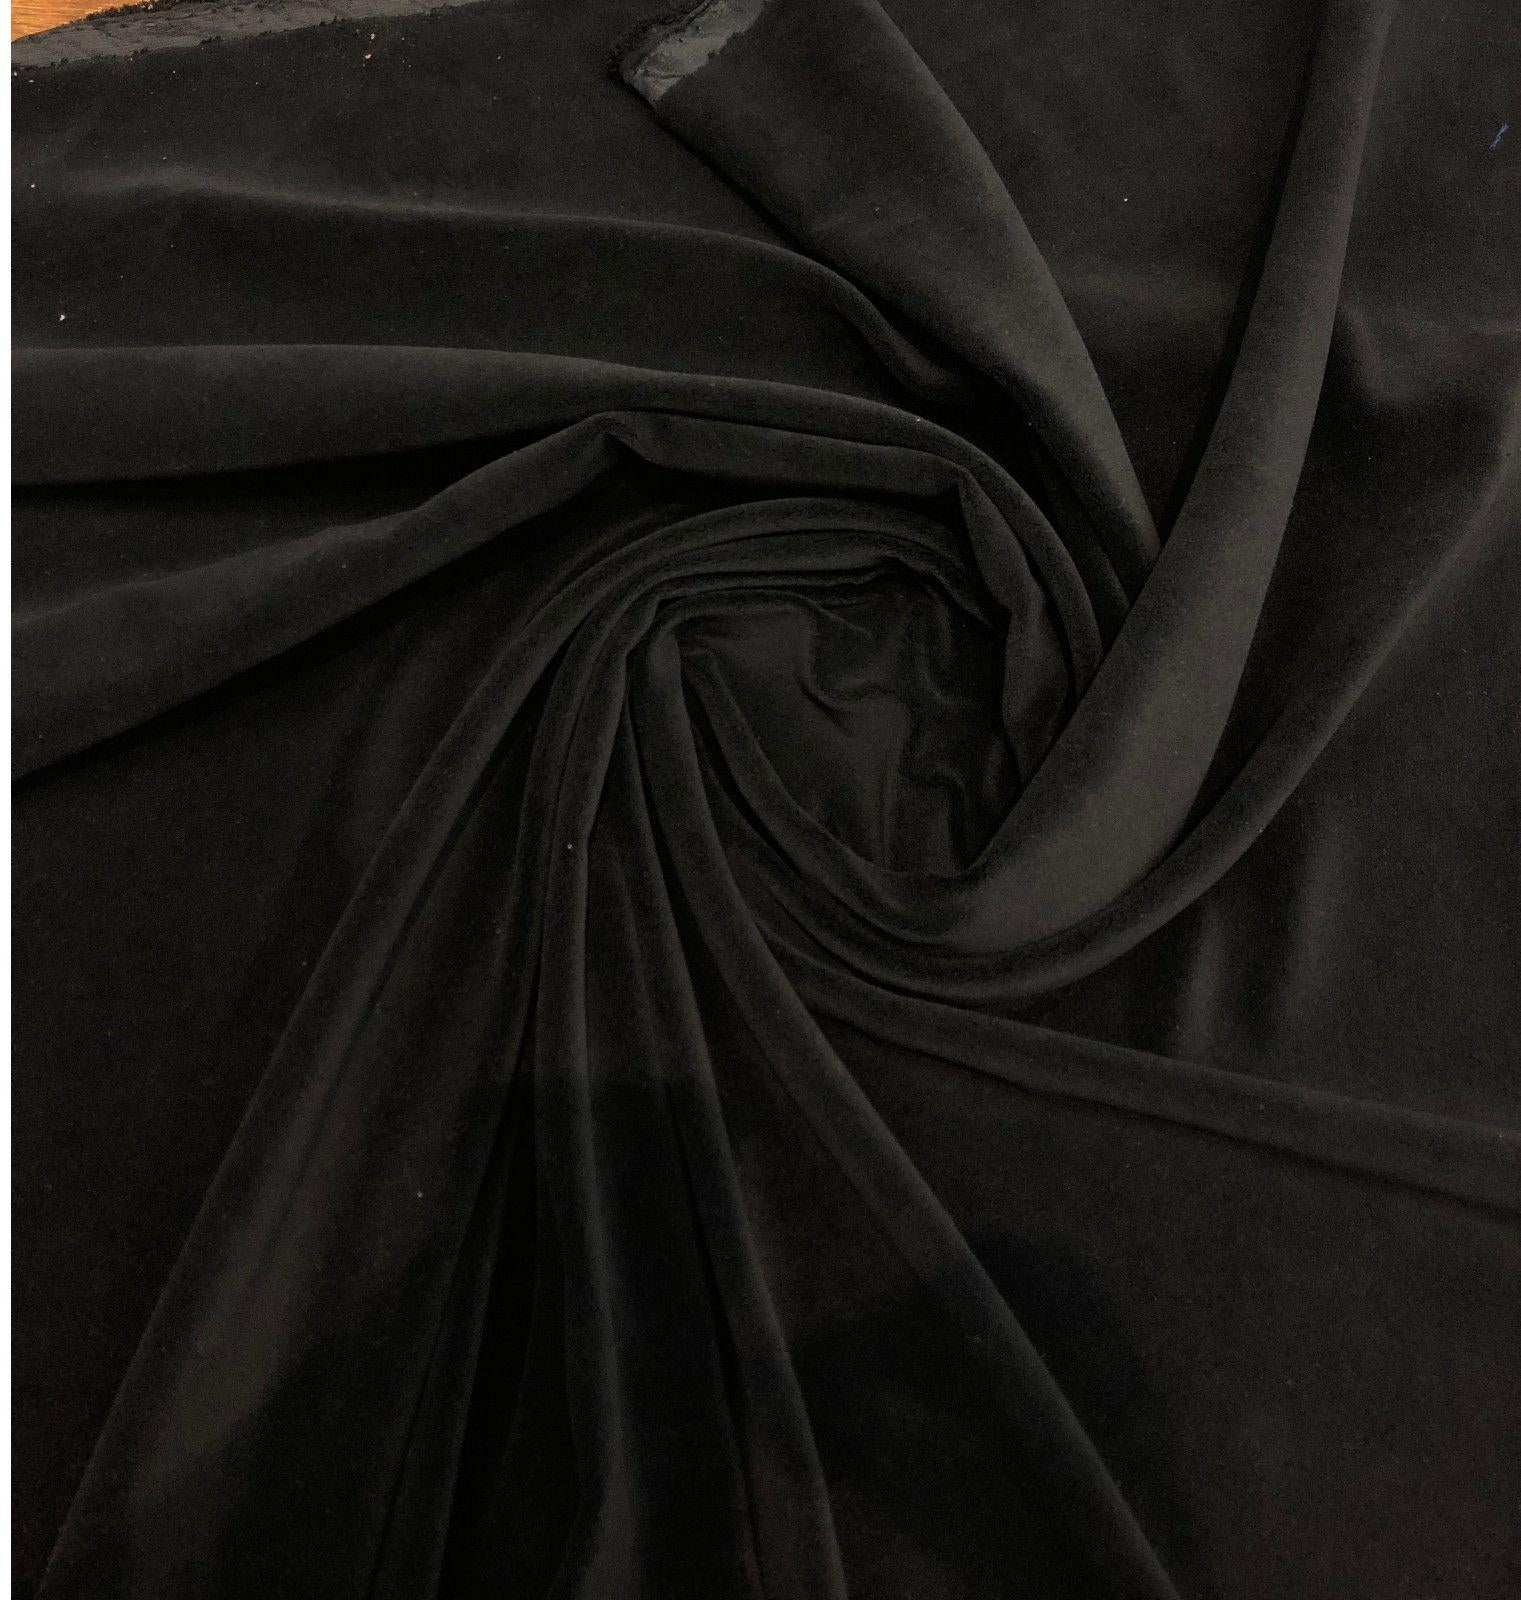  Royal Velvet Black, Fabric by the Yard